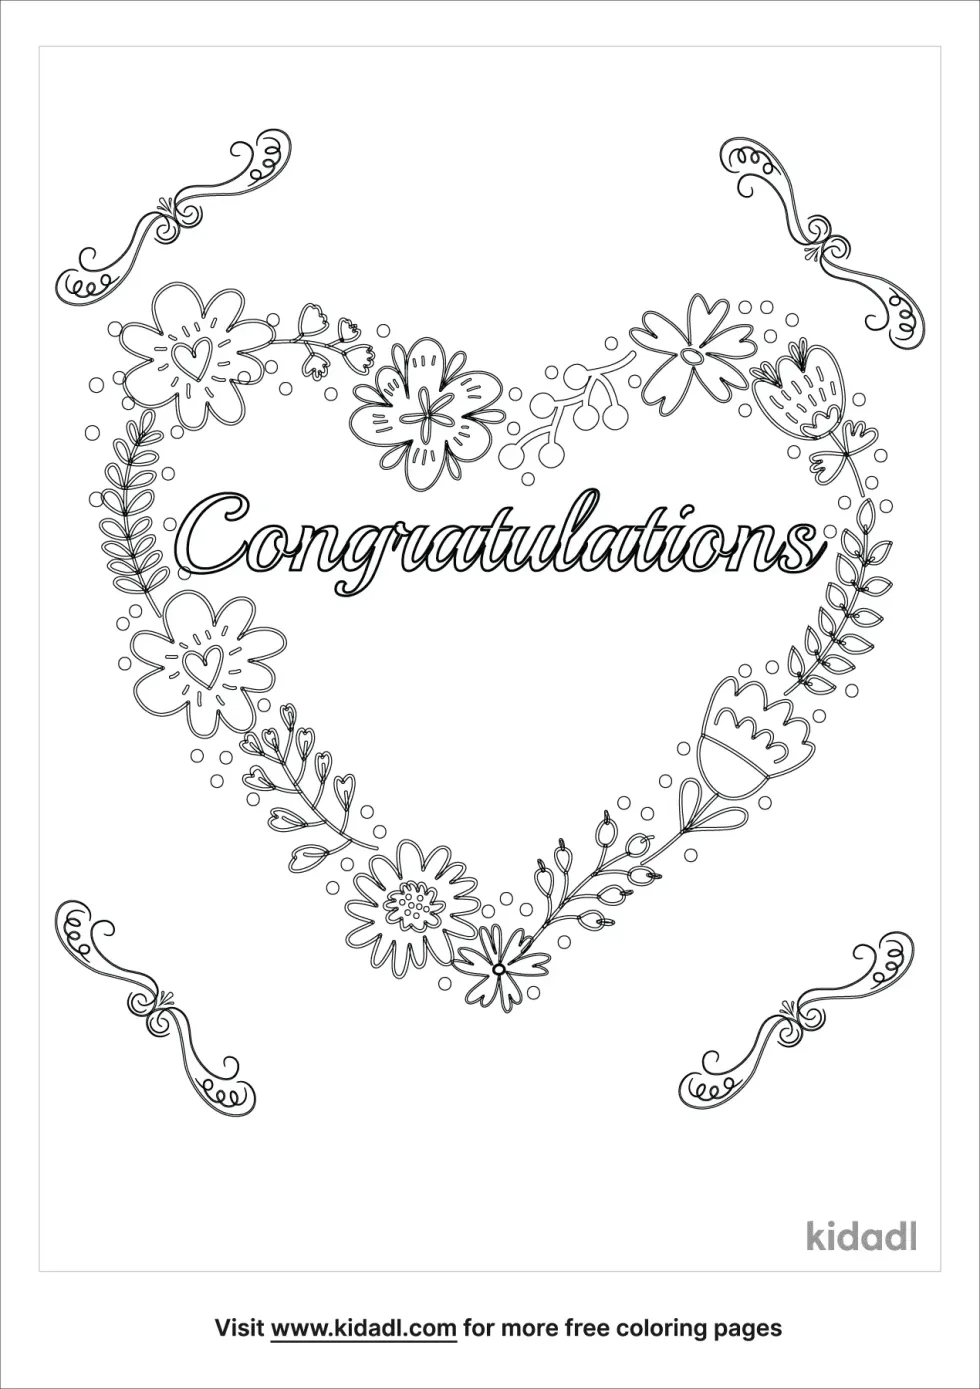 Congratulations On Wedding Card | Kidadl